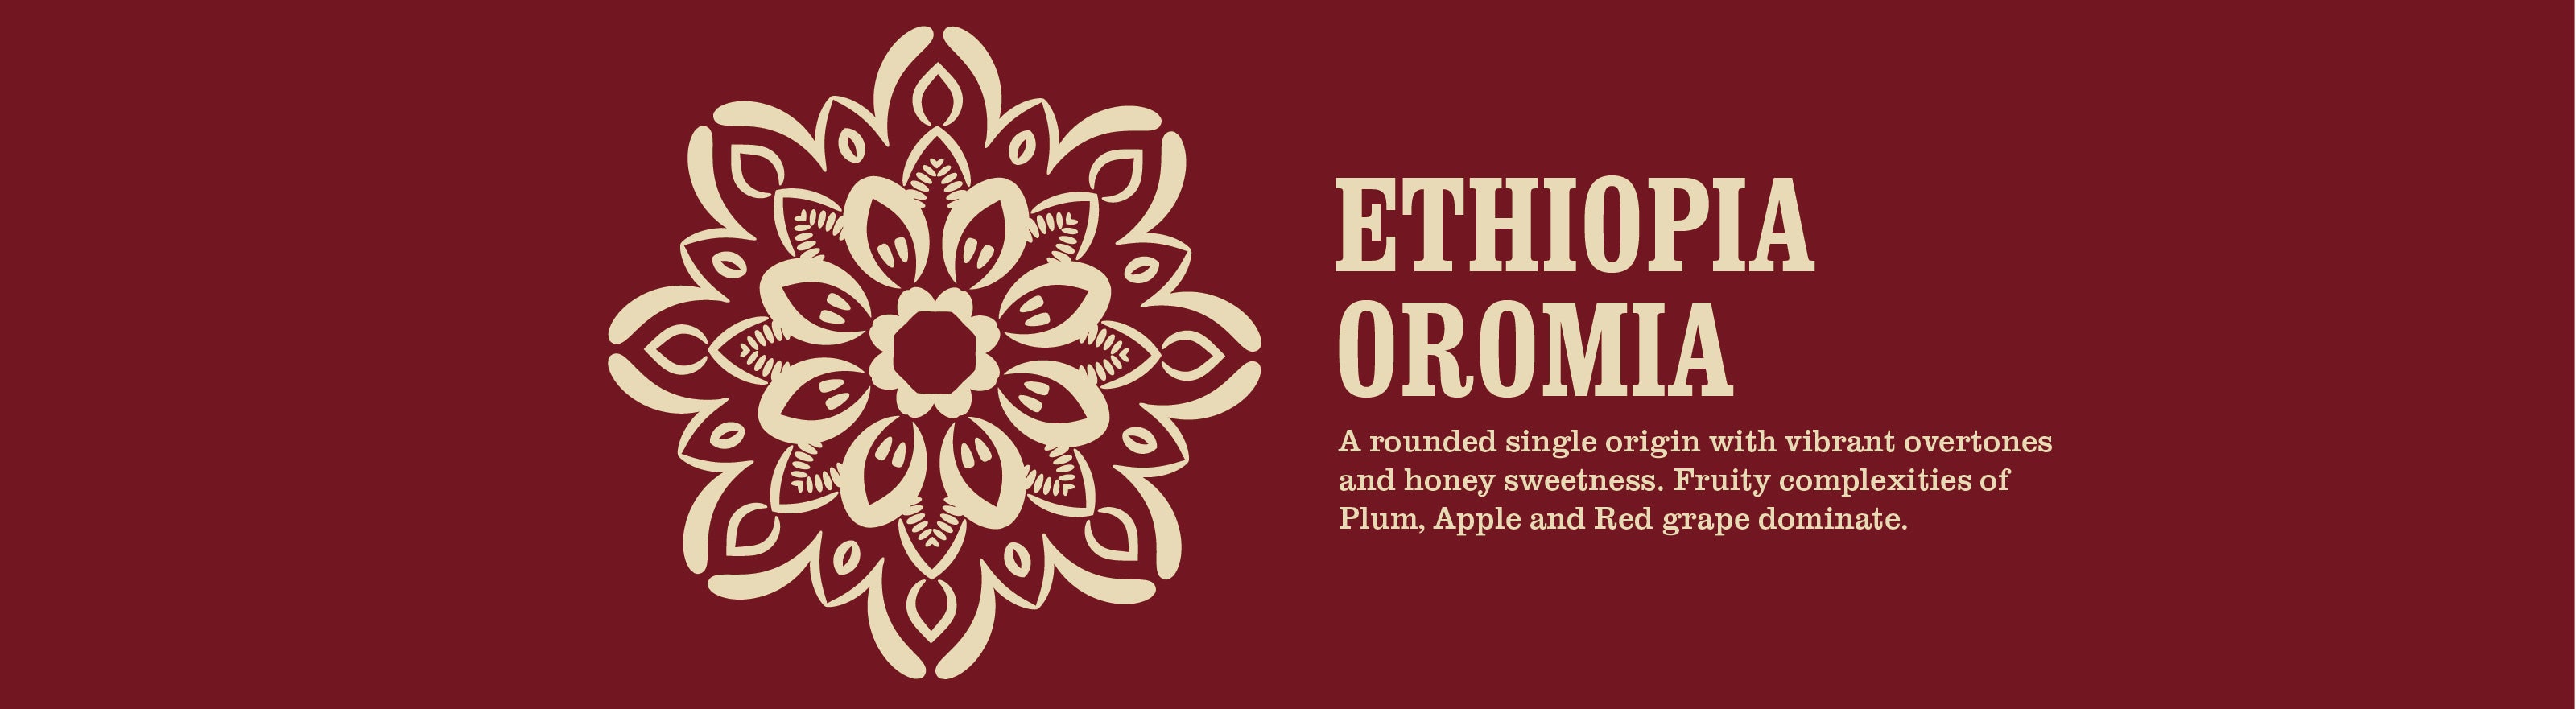 ethiopia coffee informational image